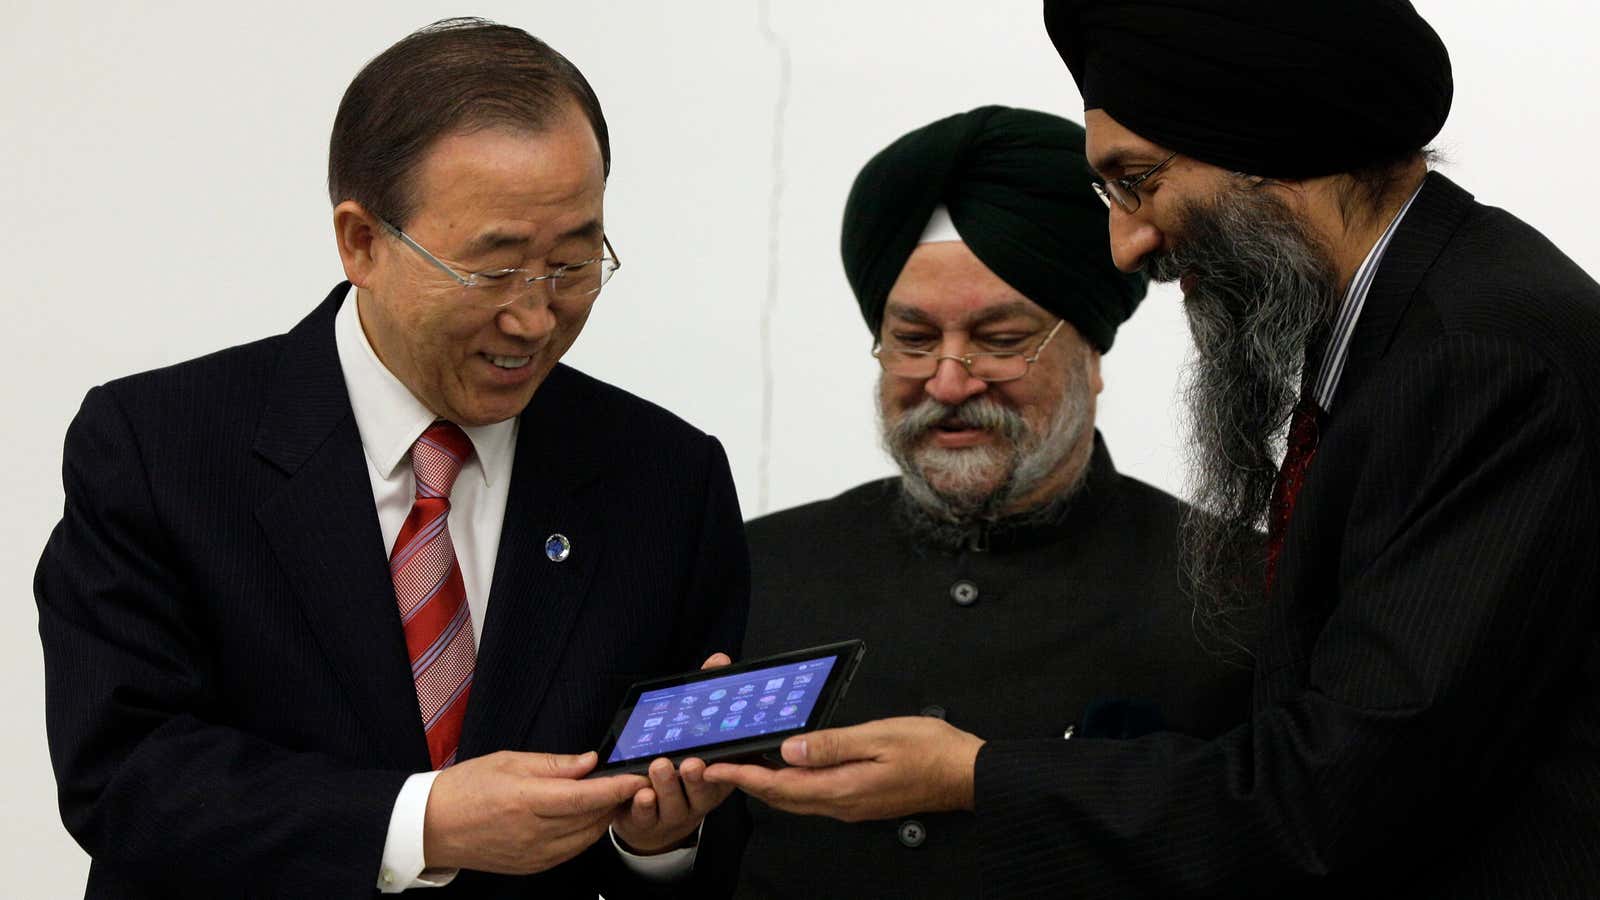 UN Secretary General Ban Ki-moon, left, receives an Aakash 2 tablet computer from Suneet Tuli, right, CEO of Datawind, and India’s UN Ambassador Hardeep Singh Puri. (Nov. 28, 2012)